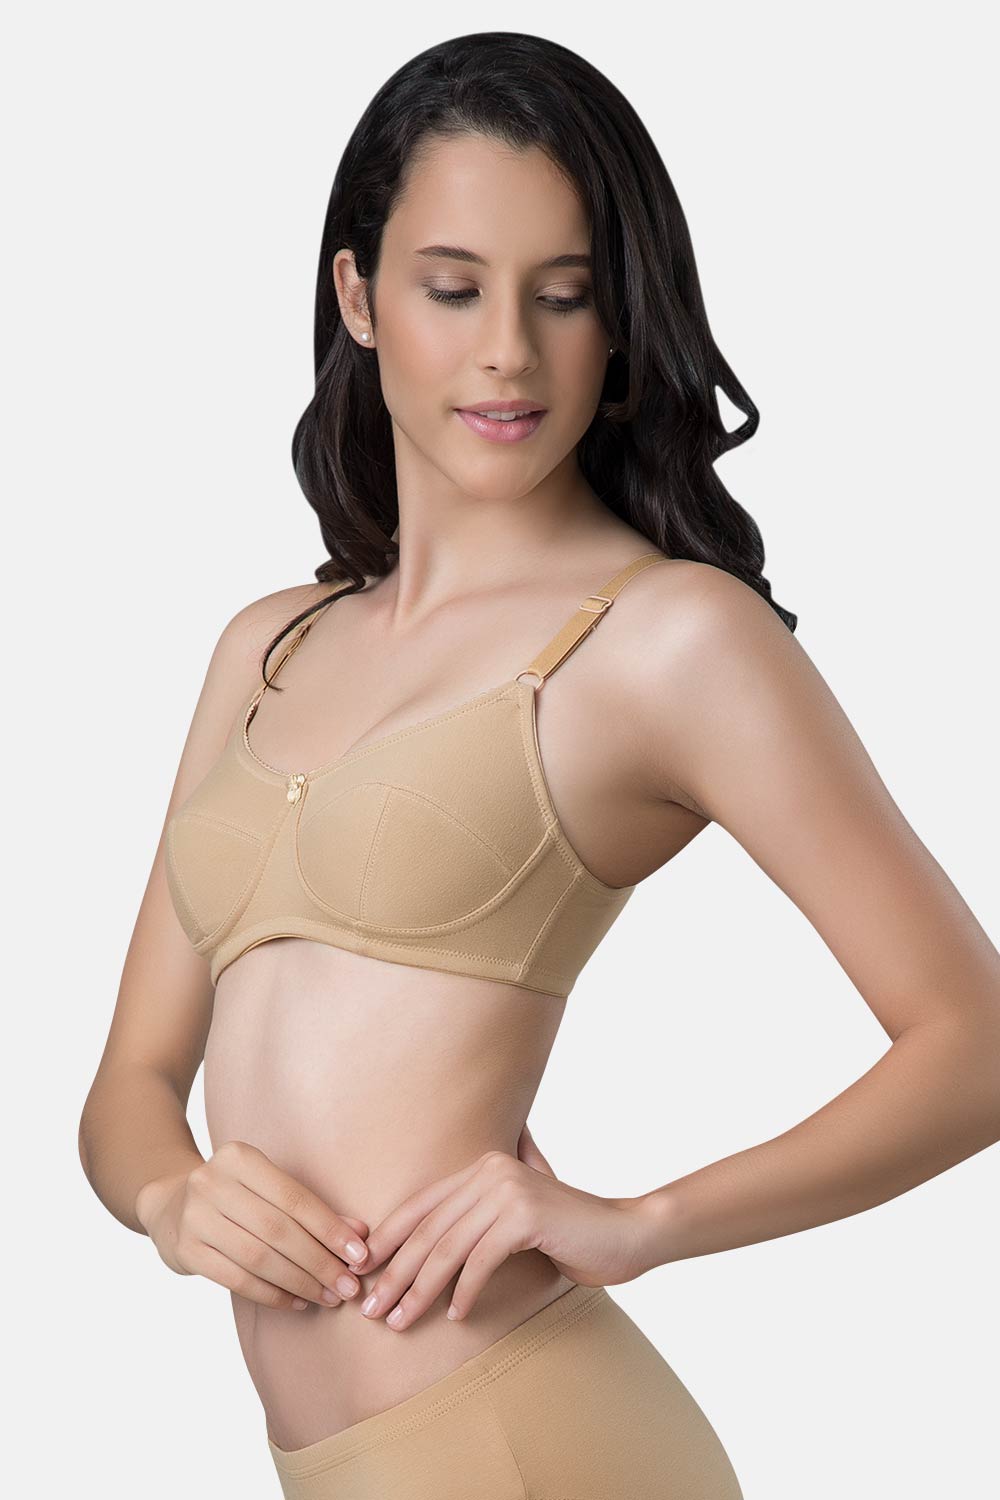 Buy Round stitch cotton bra with elastic strap Online @ ₹120 from